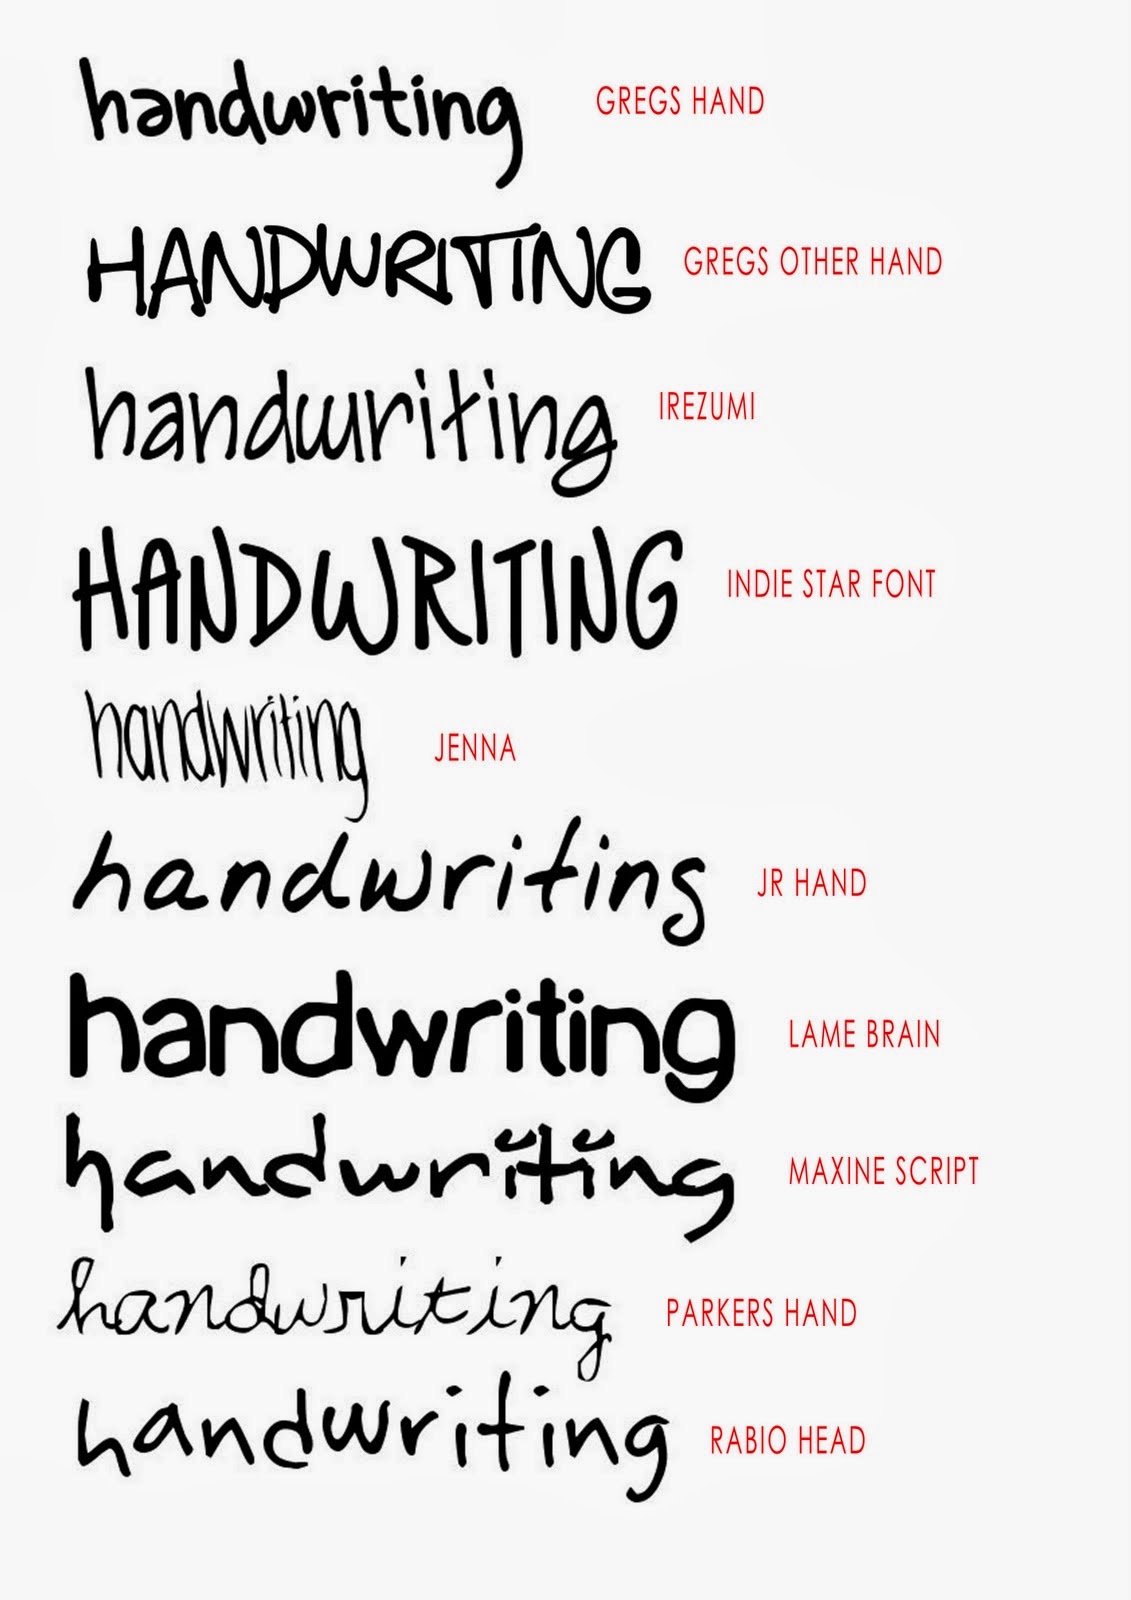 How to use handwriting font generator - geserdrop